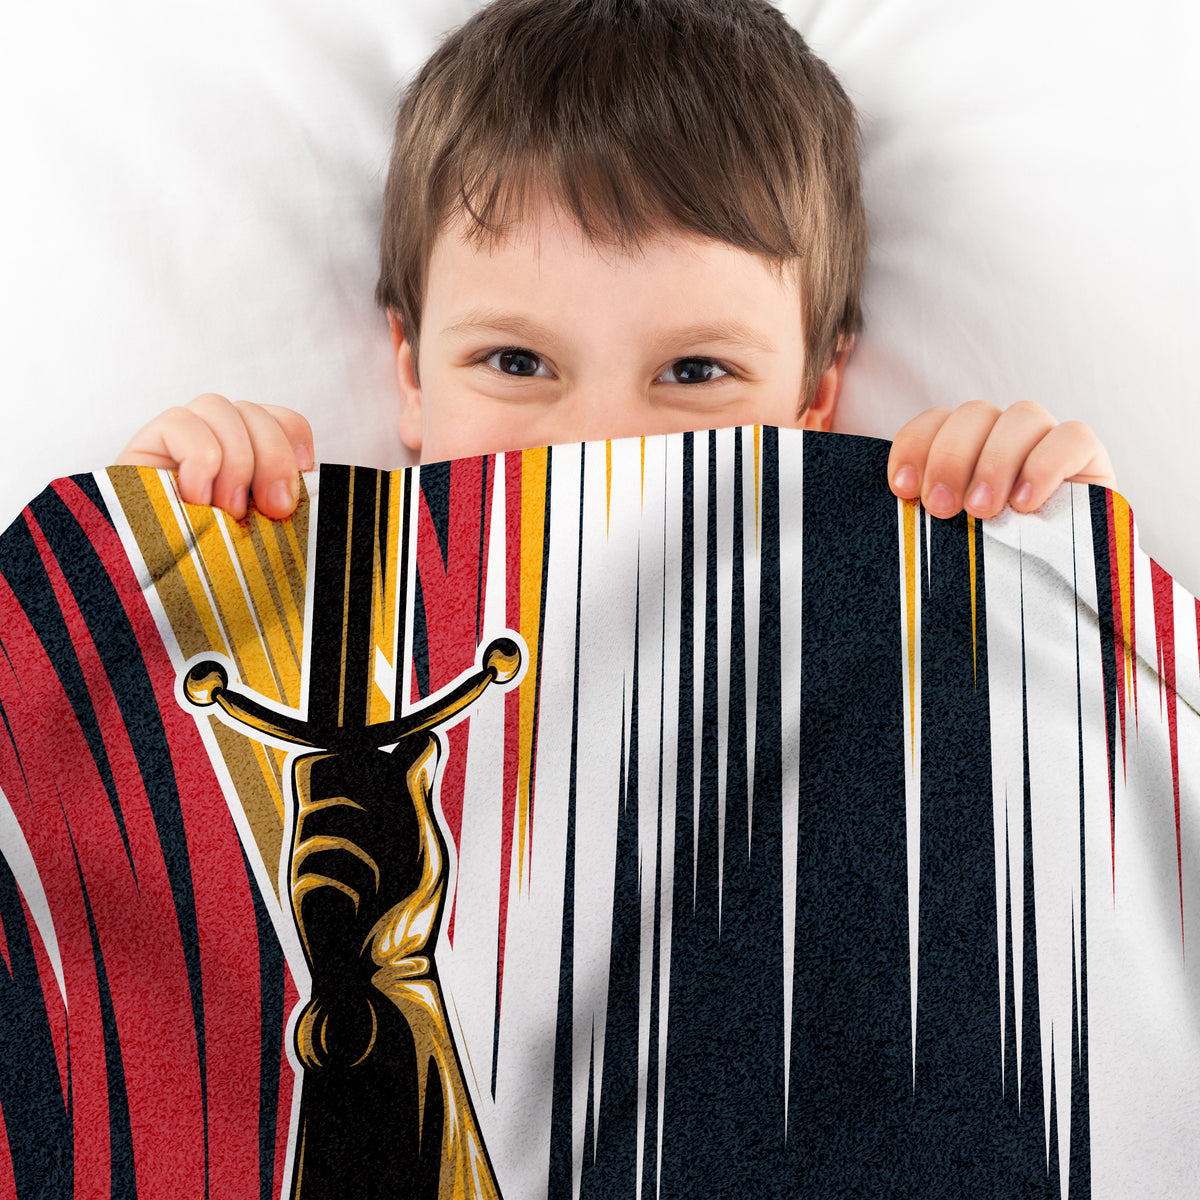 Vegas Golden Knights Knight 60” x 80” Plush Blanket